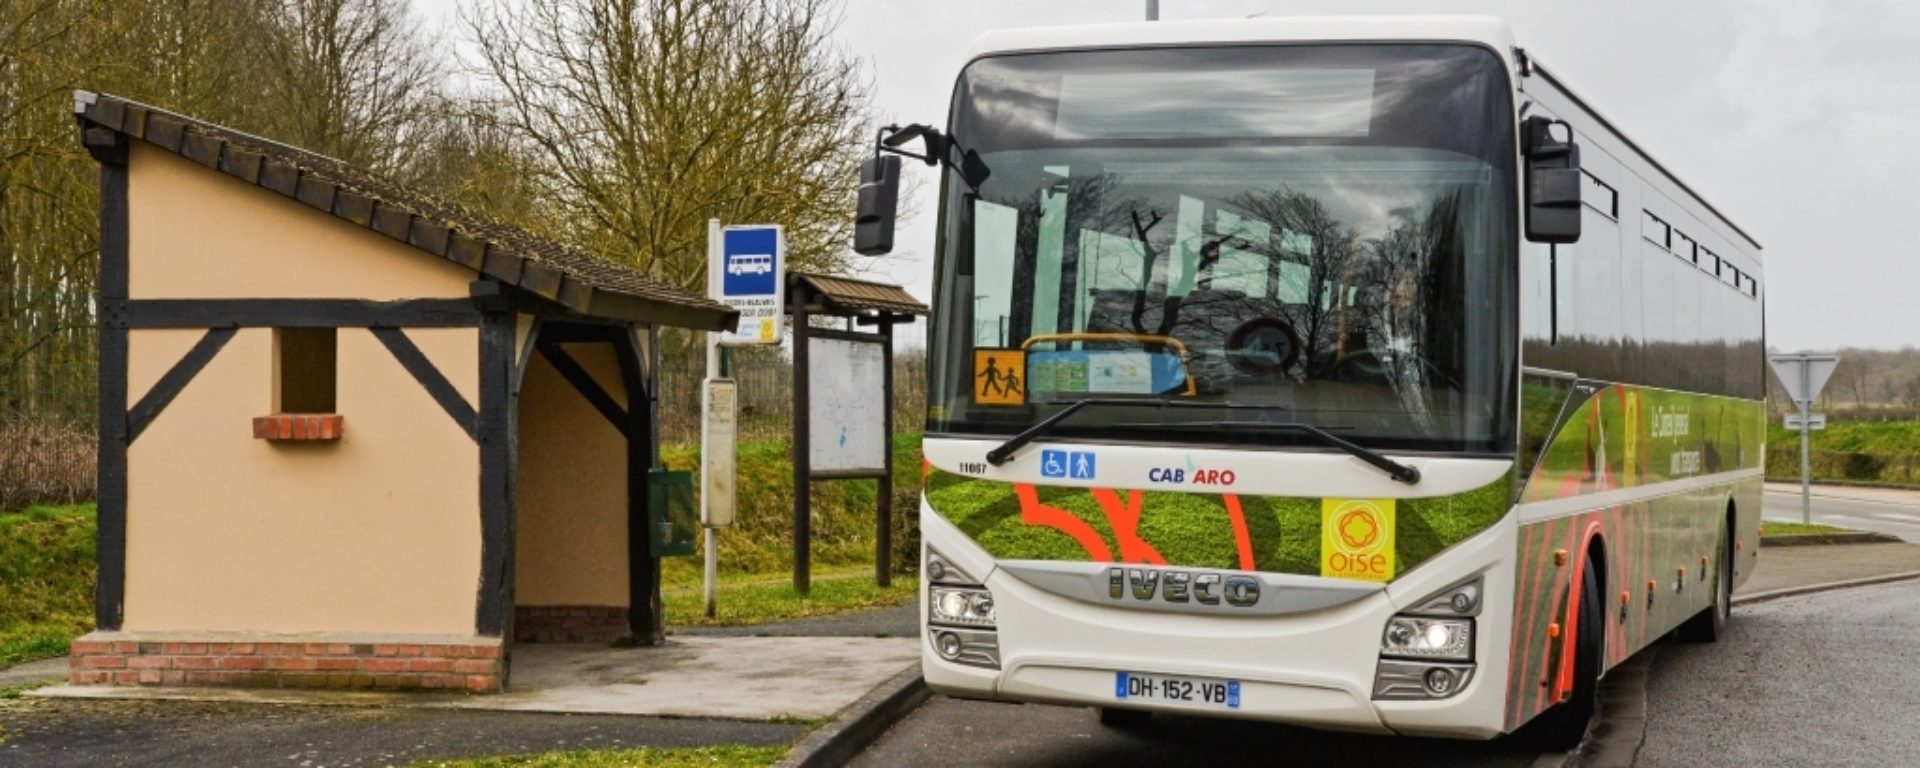 Bus_transport-urbain-Méru_Sablons-bus_CABARO_Transdev-Haut-de-France